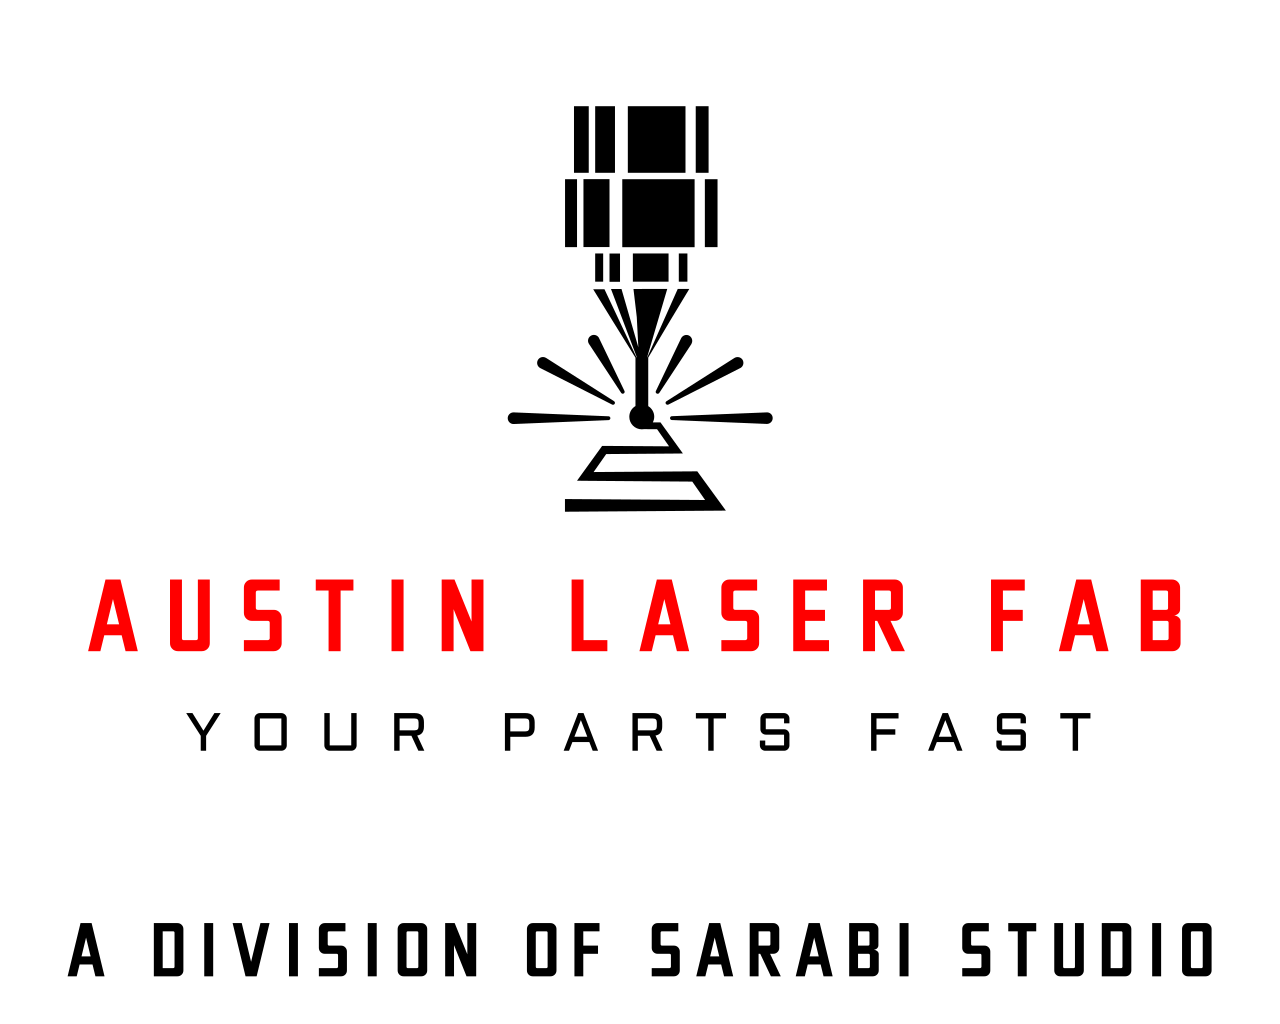 Austin Laser FAB